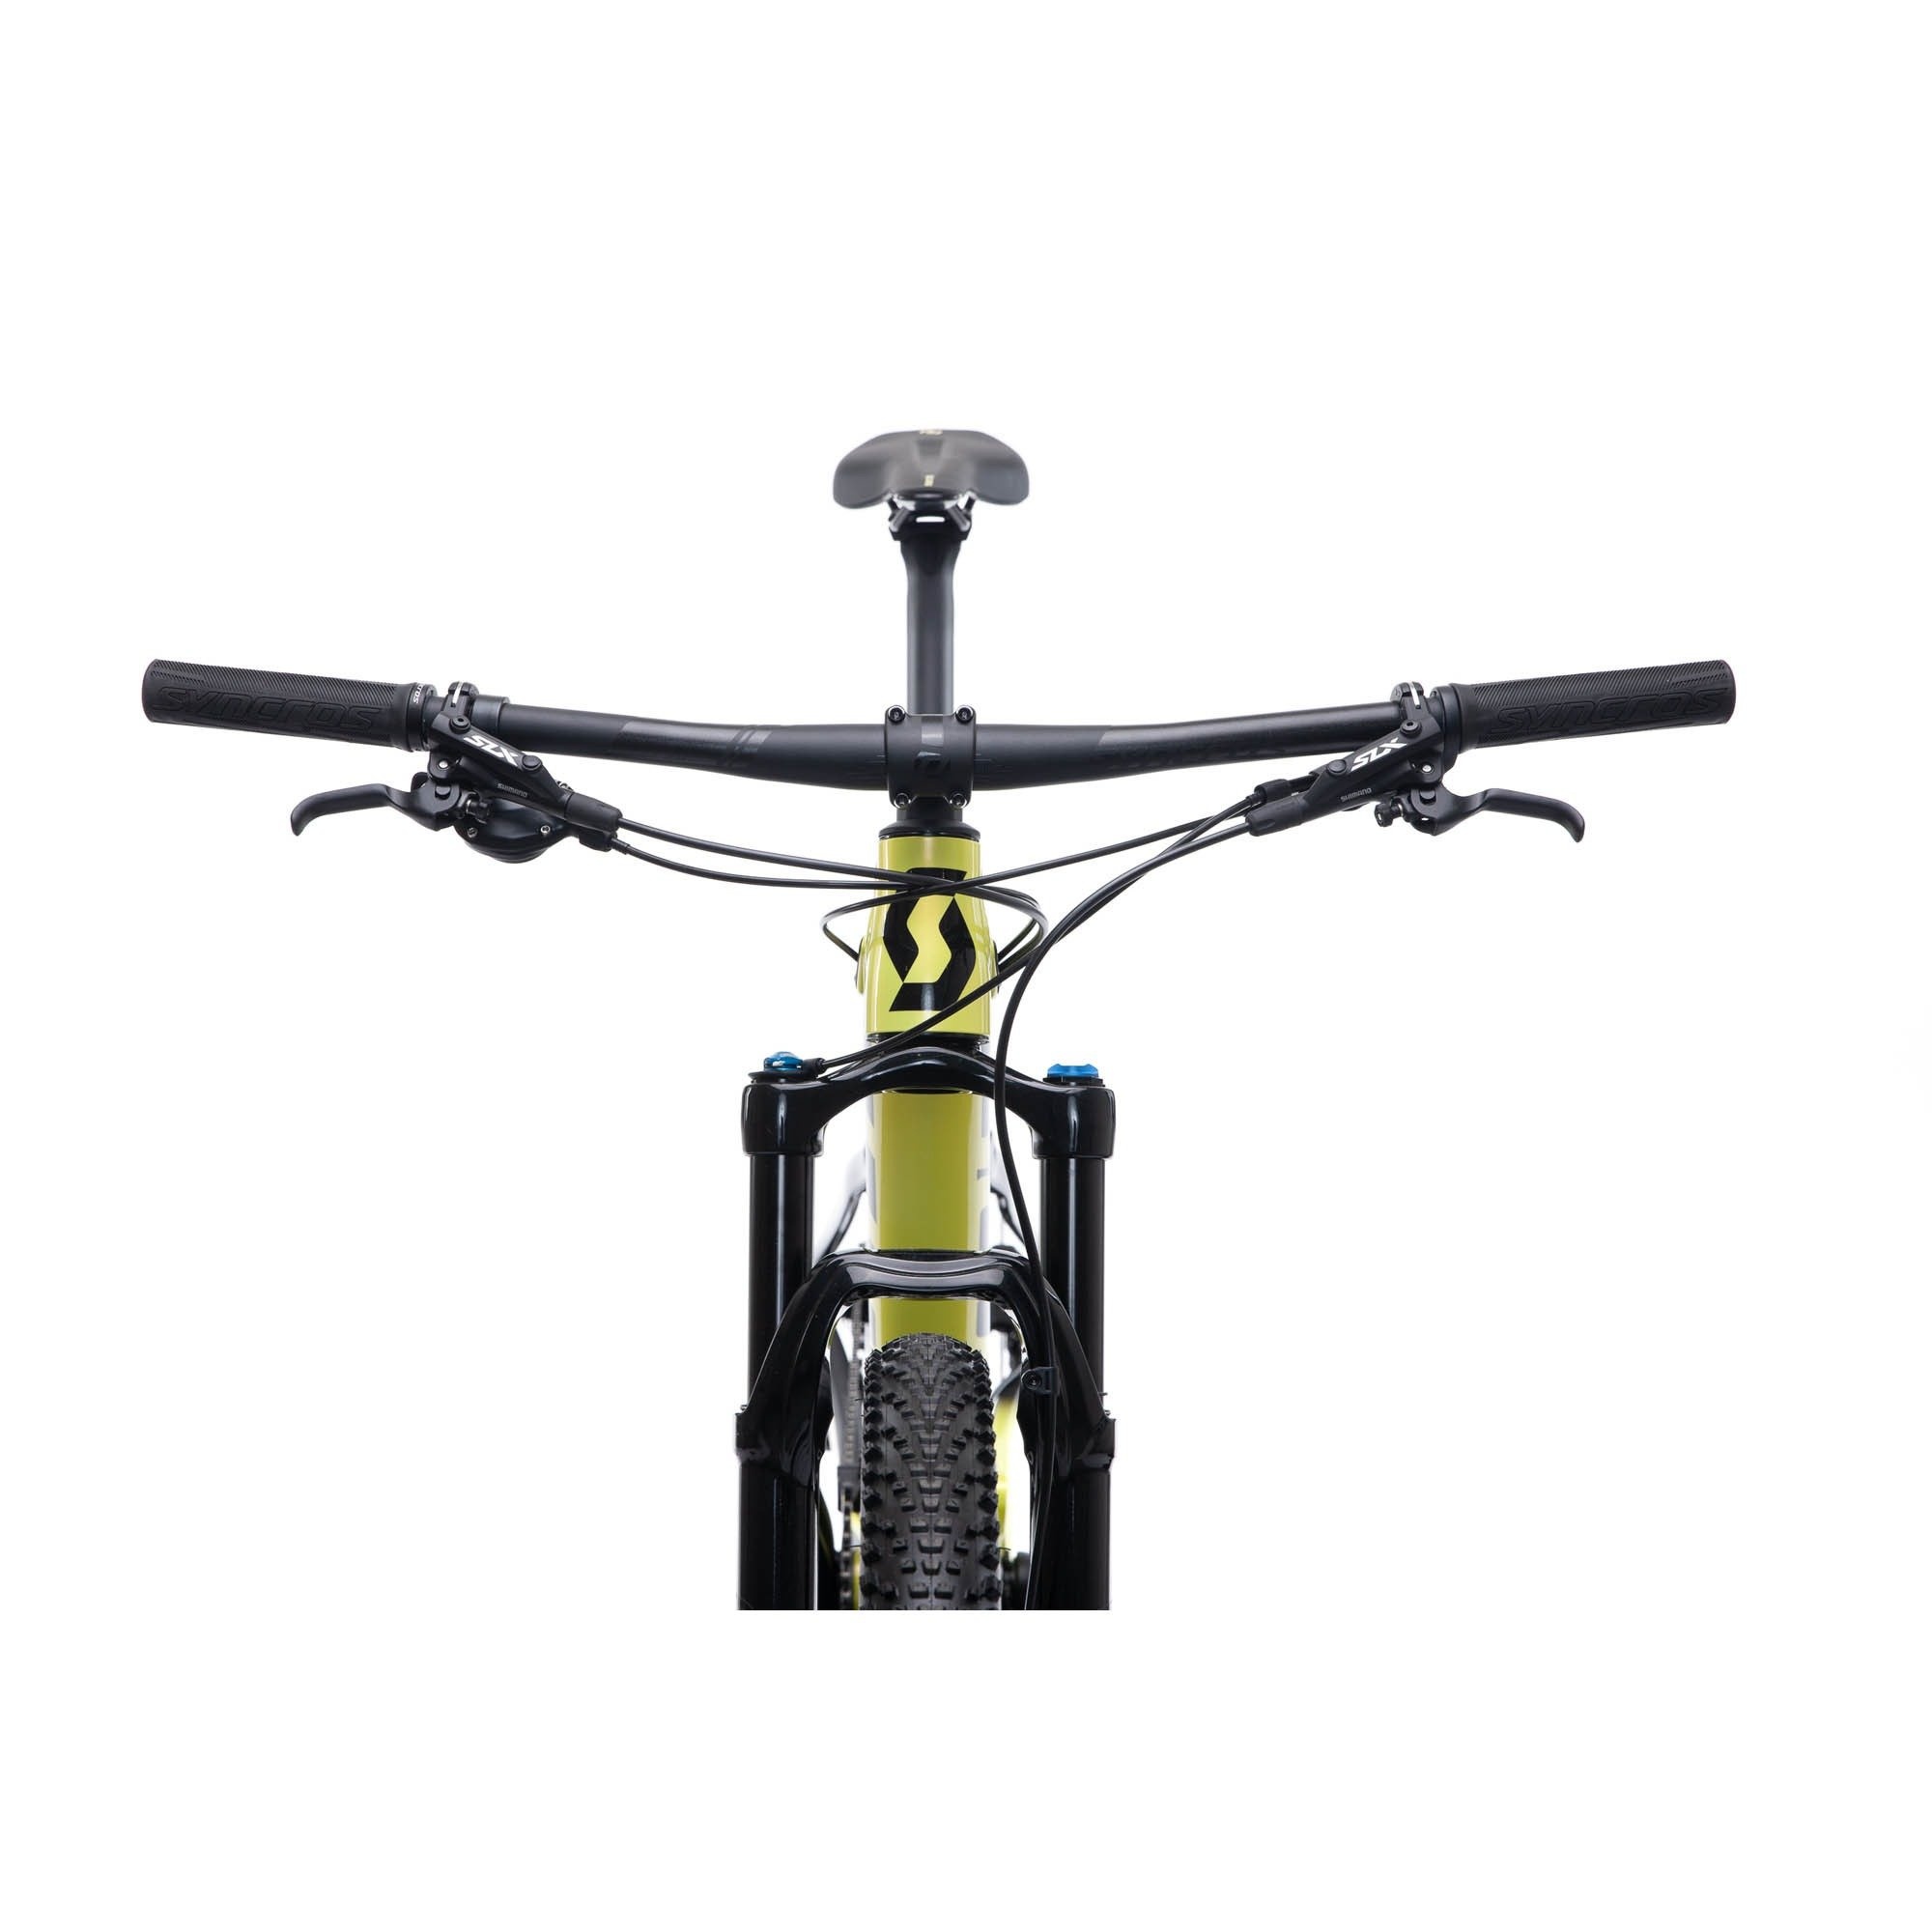 Cykler - Mountainbikes - Scott Spark RC 900 Comp 2020